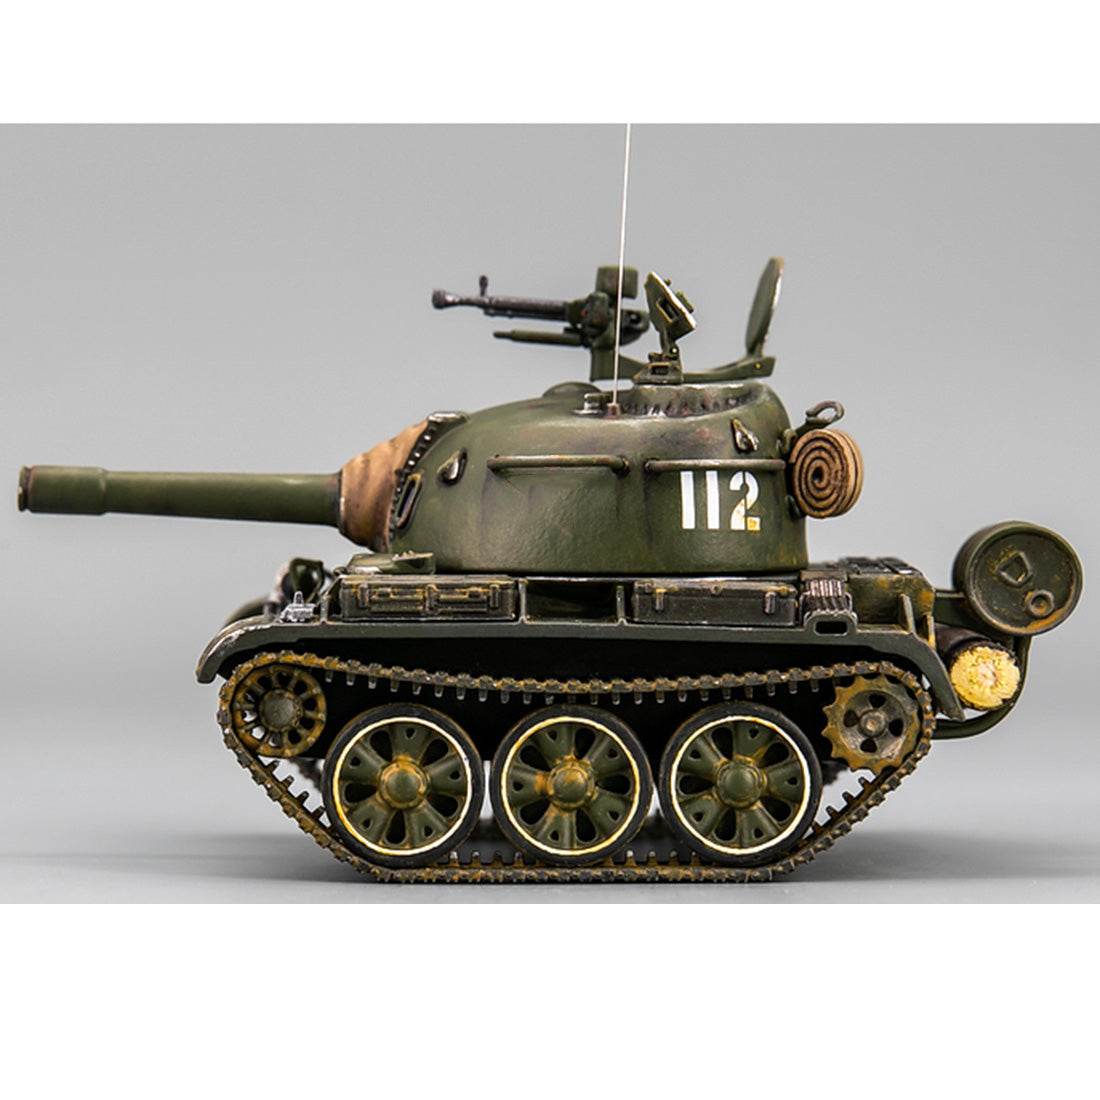 3D Printed Military Display, Type 59 Main Battle Tank Model